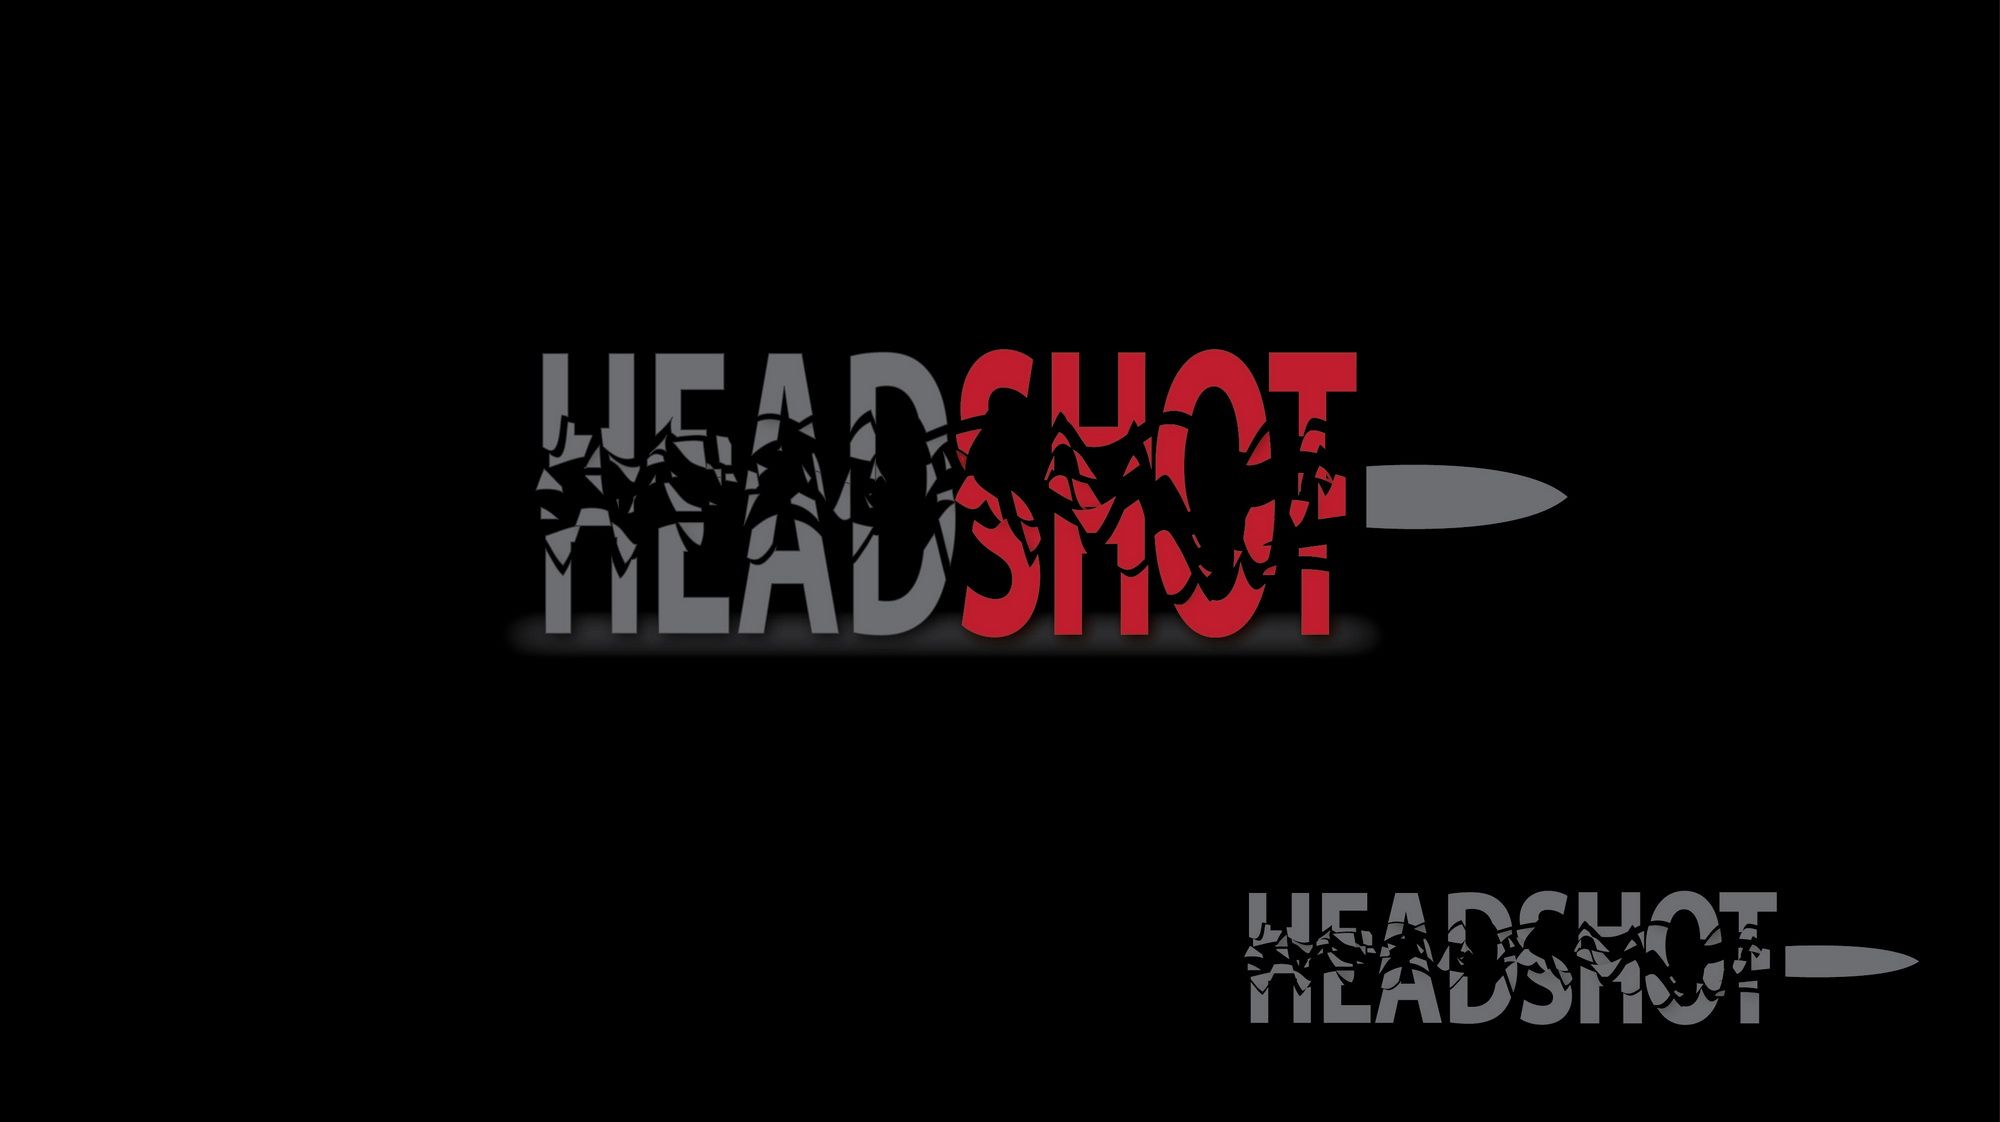 Логотип для игрового проекта HEADSHOT - дизайнер Chinkee